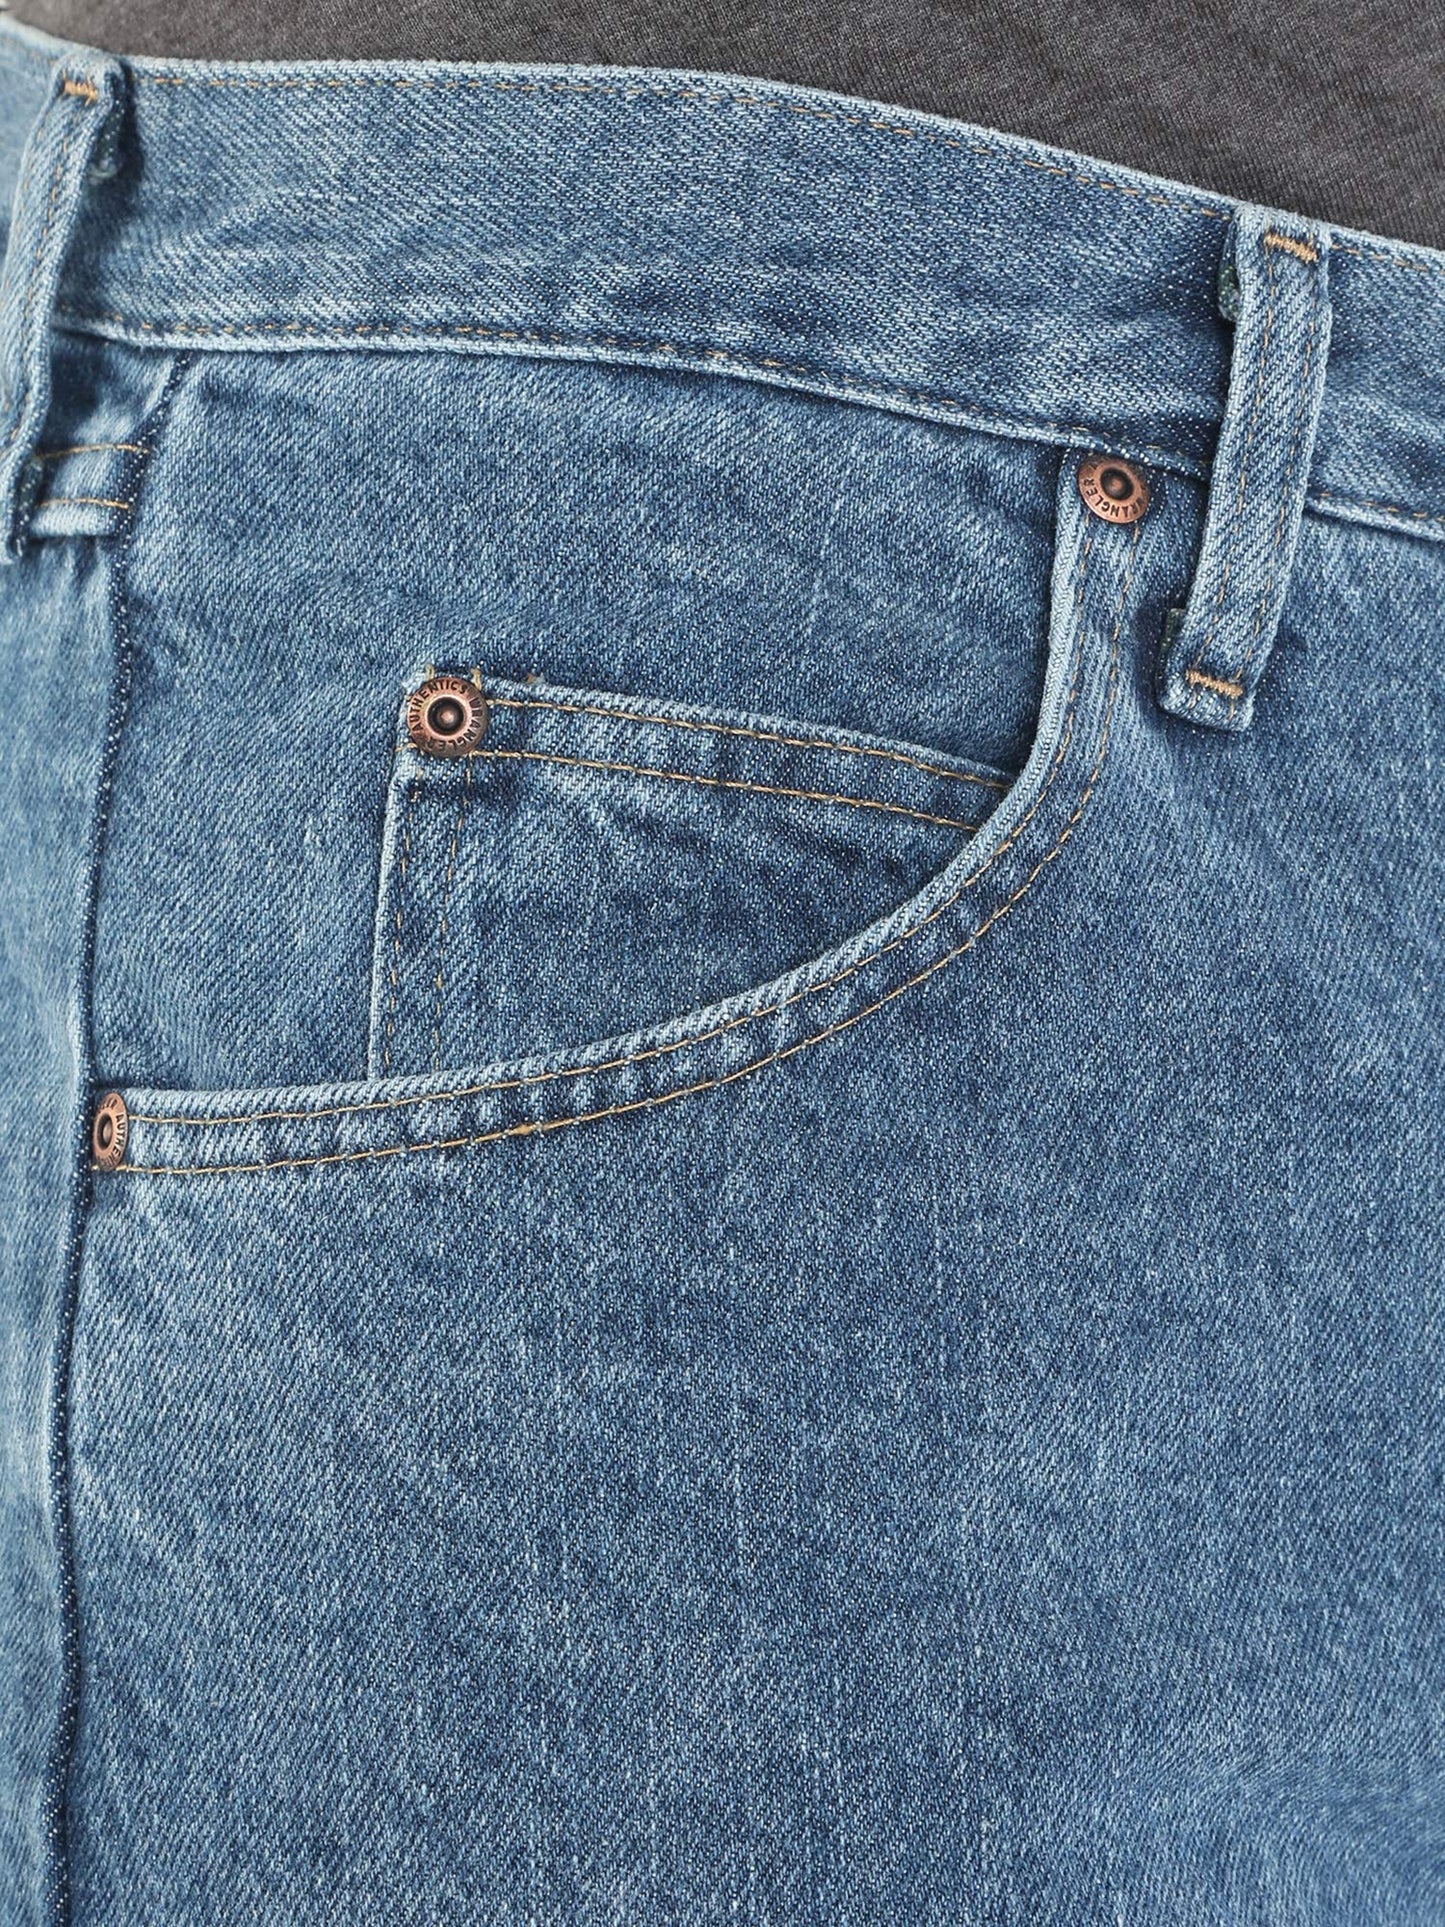 Wrangler Authentics Men's Big & Tall Classic 5-Pocket Relaxed Fit Cotton Jean, Vintage Stonewash, 44W X 28L